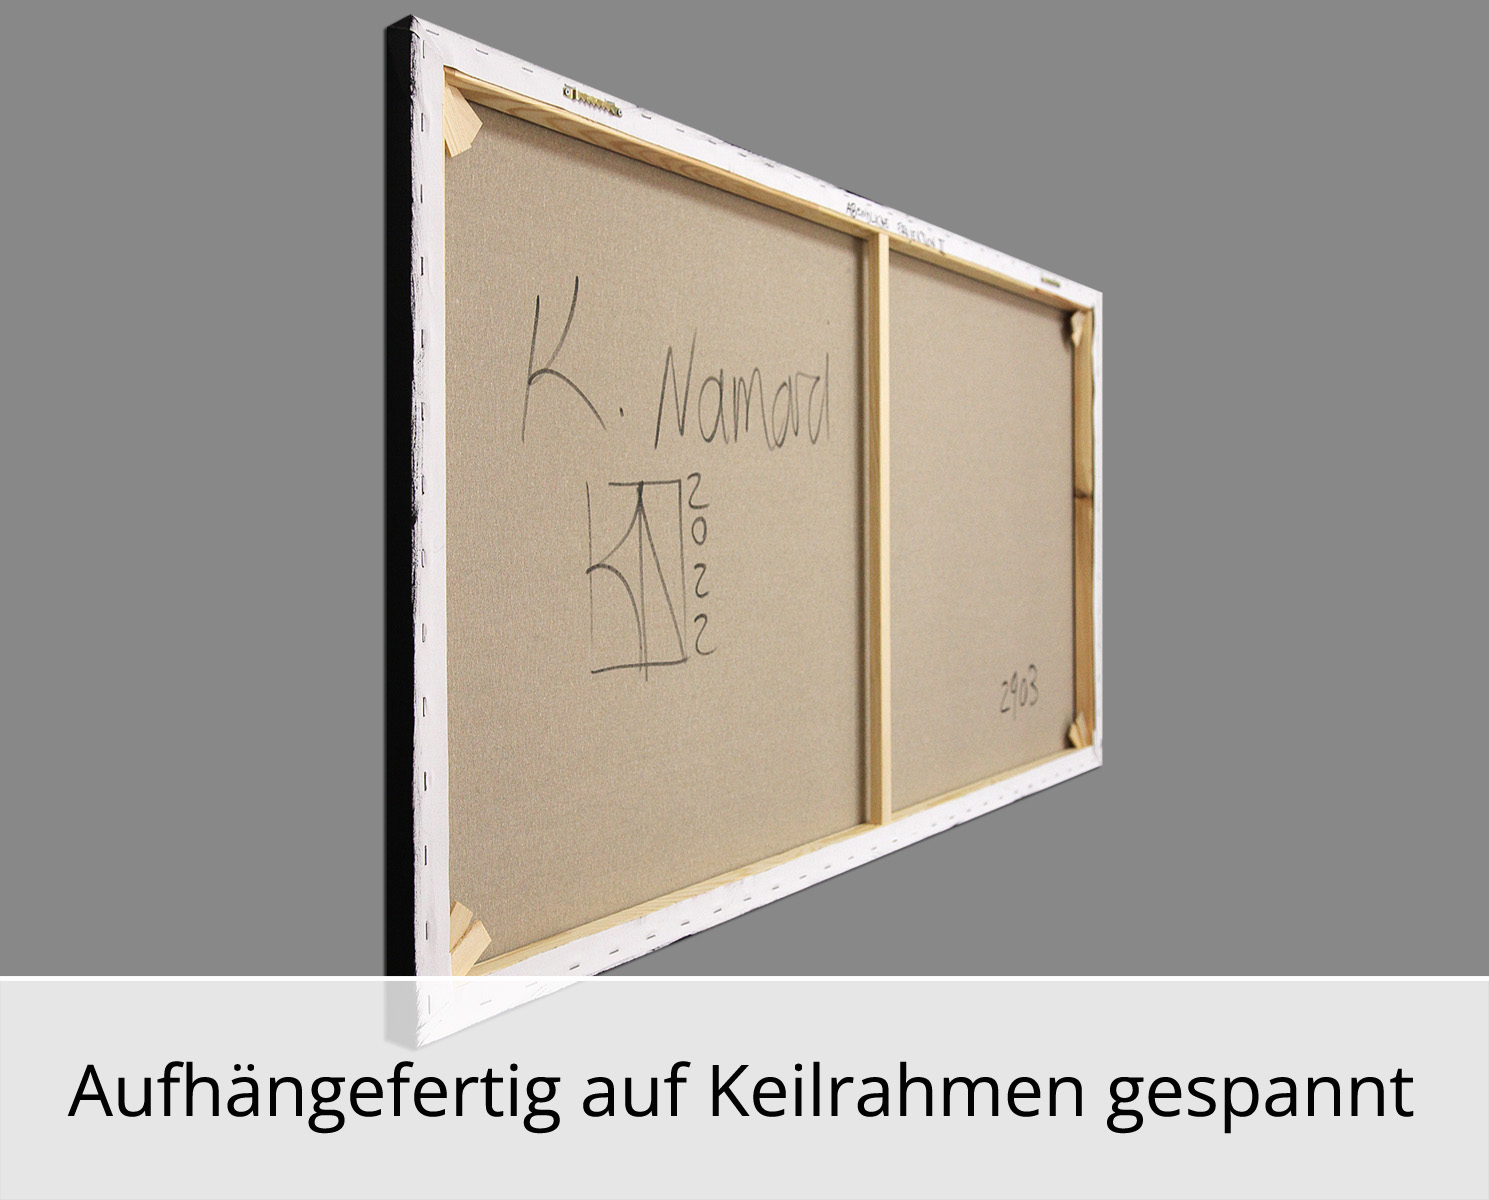 K. Namazi: "Abendliche Projektion III", Acrylgemälde (Original/ Unikat)